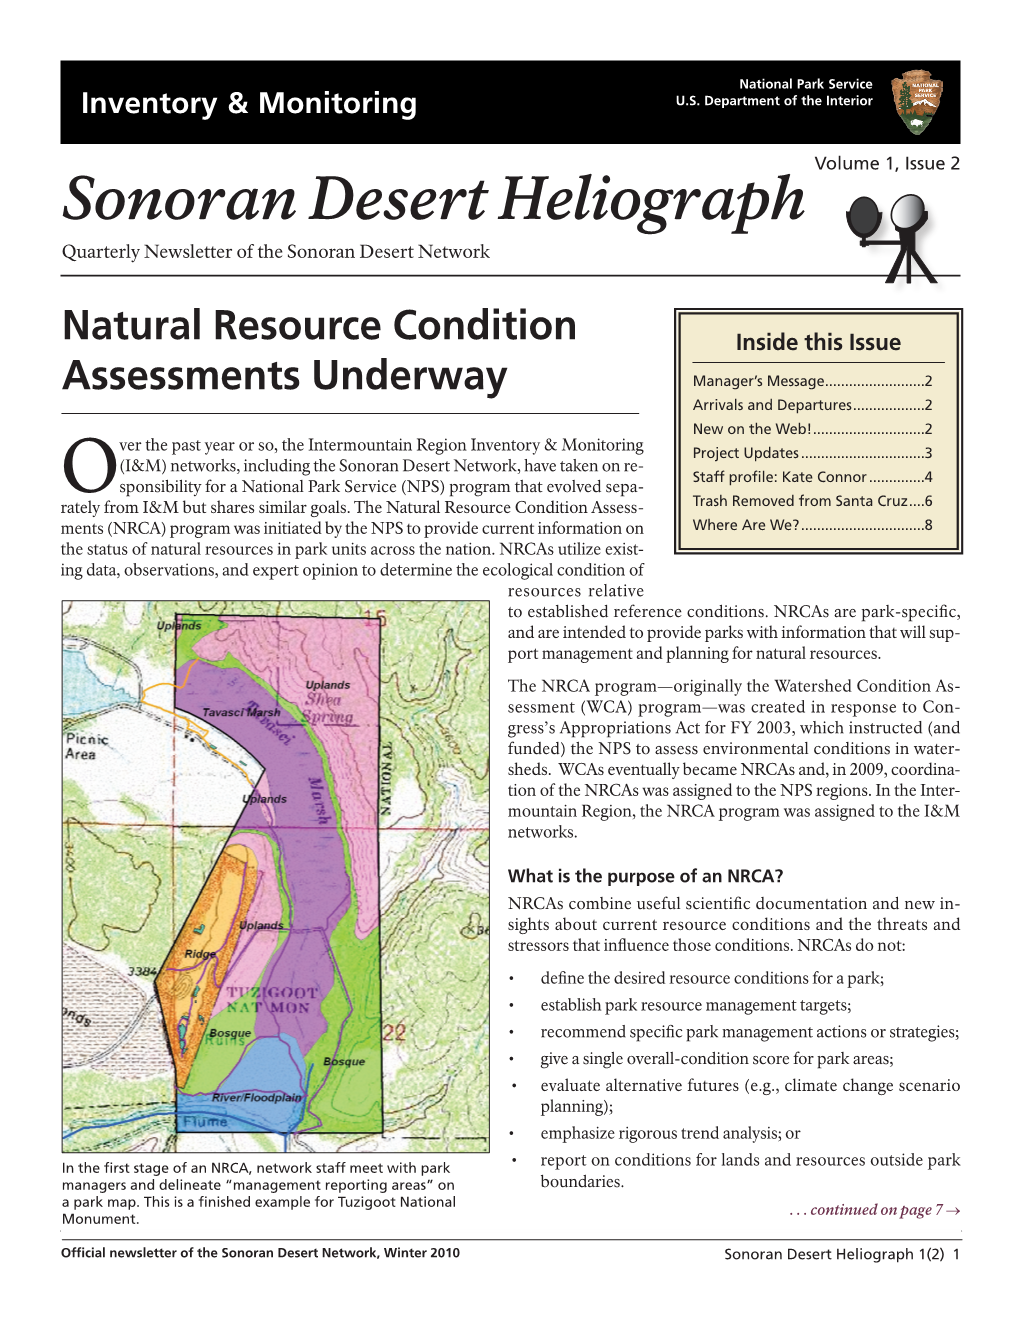 Sonoran Desert Heliograph Quarterly Newsletter of the Sonoran Desert Network